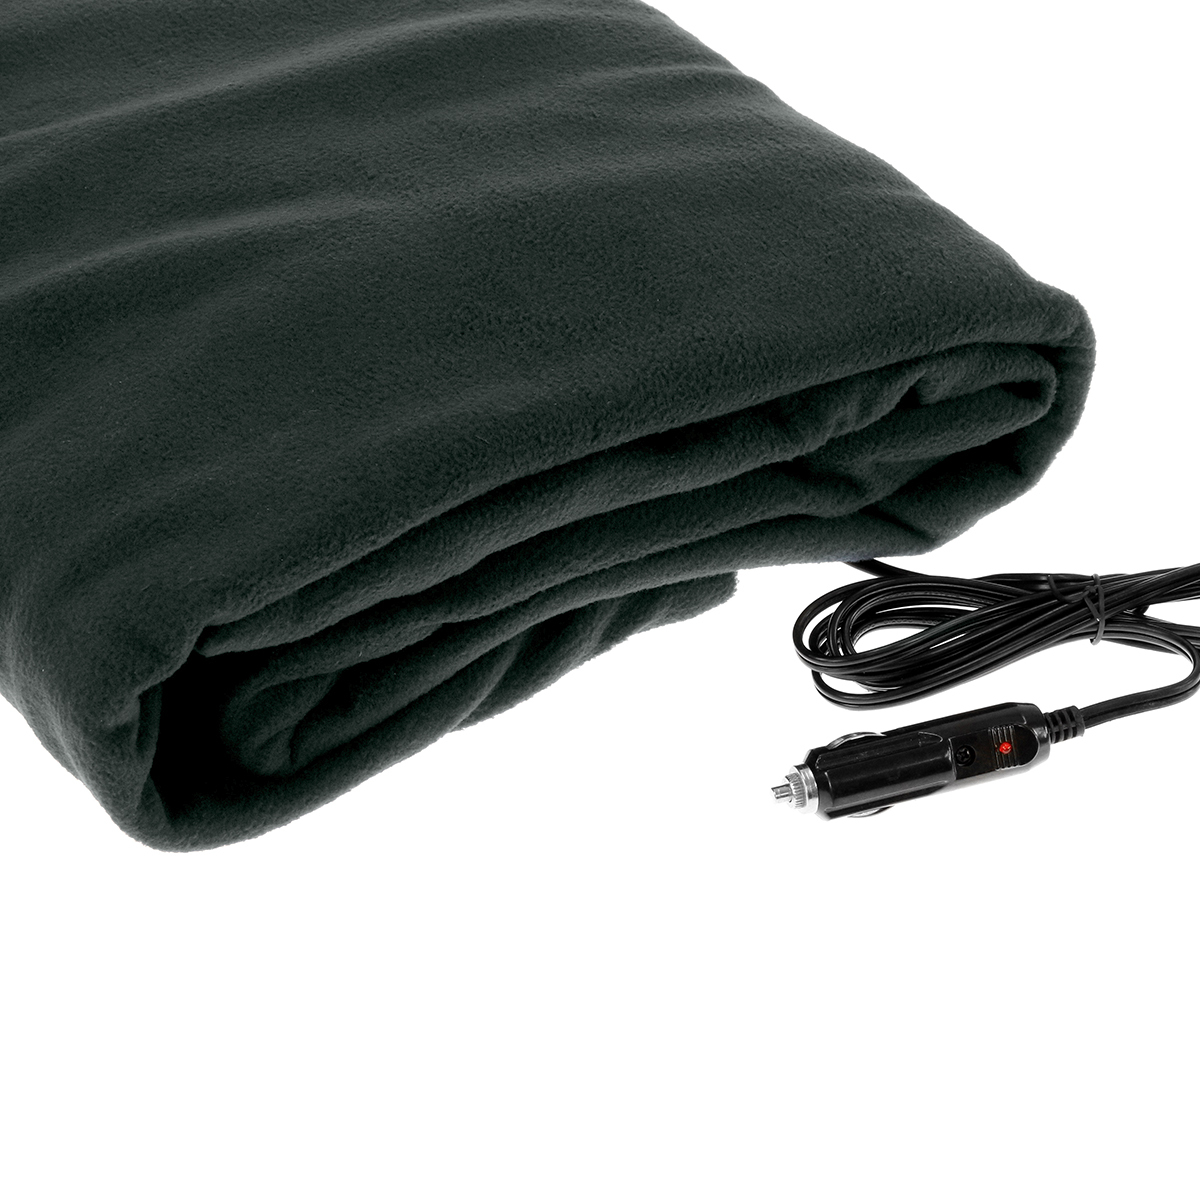 Heated Electric Car Blanket 150x110cm 12V – Black